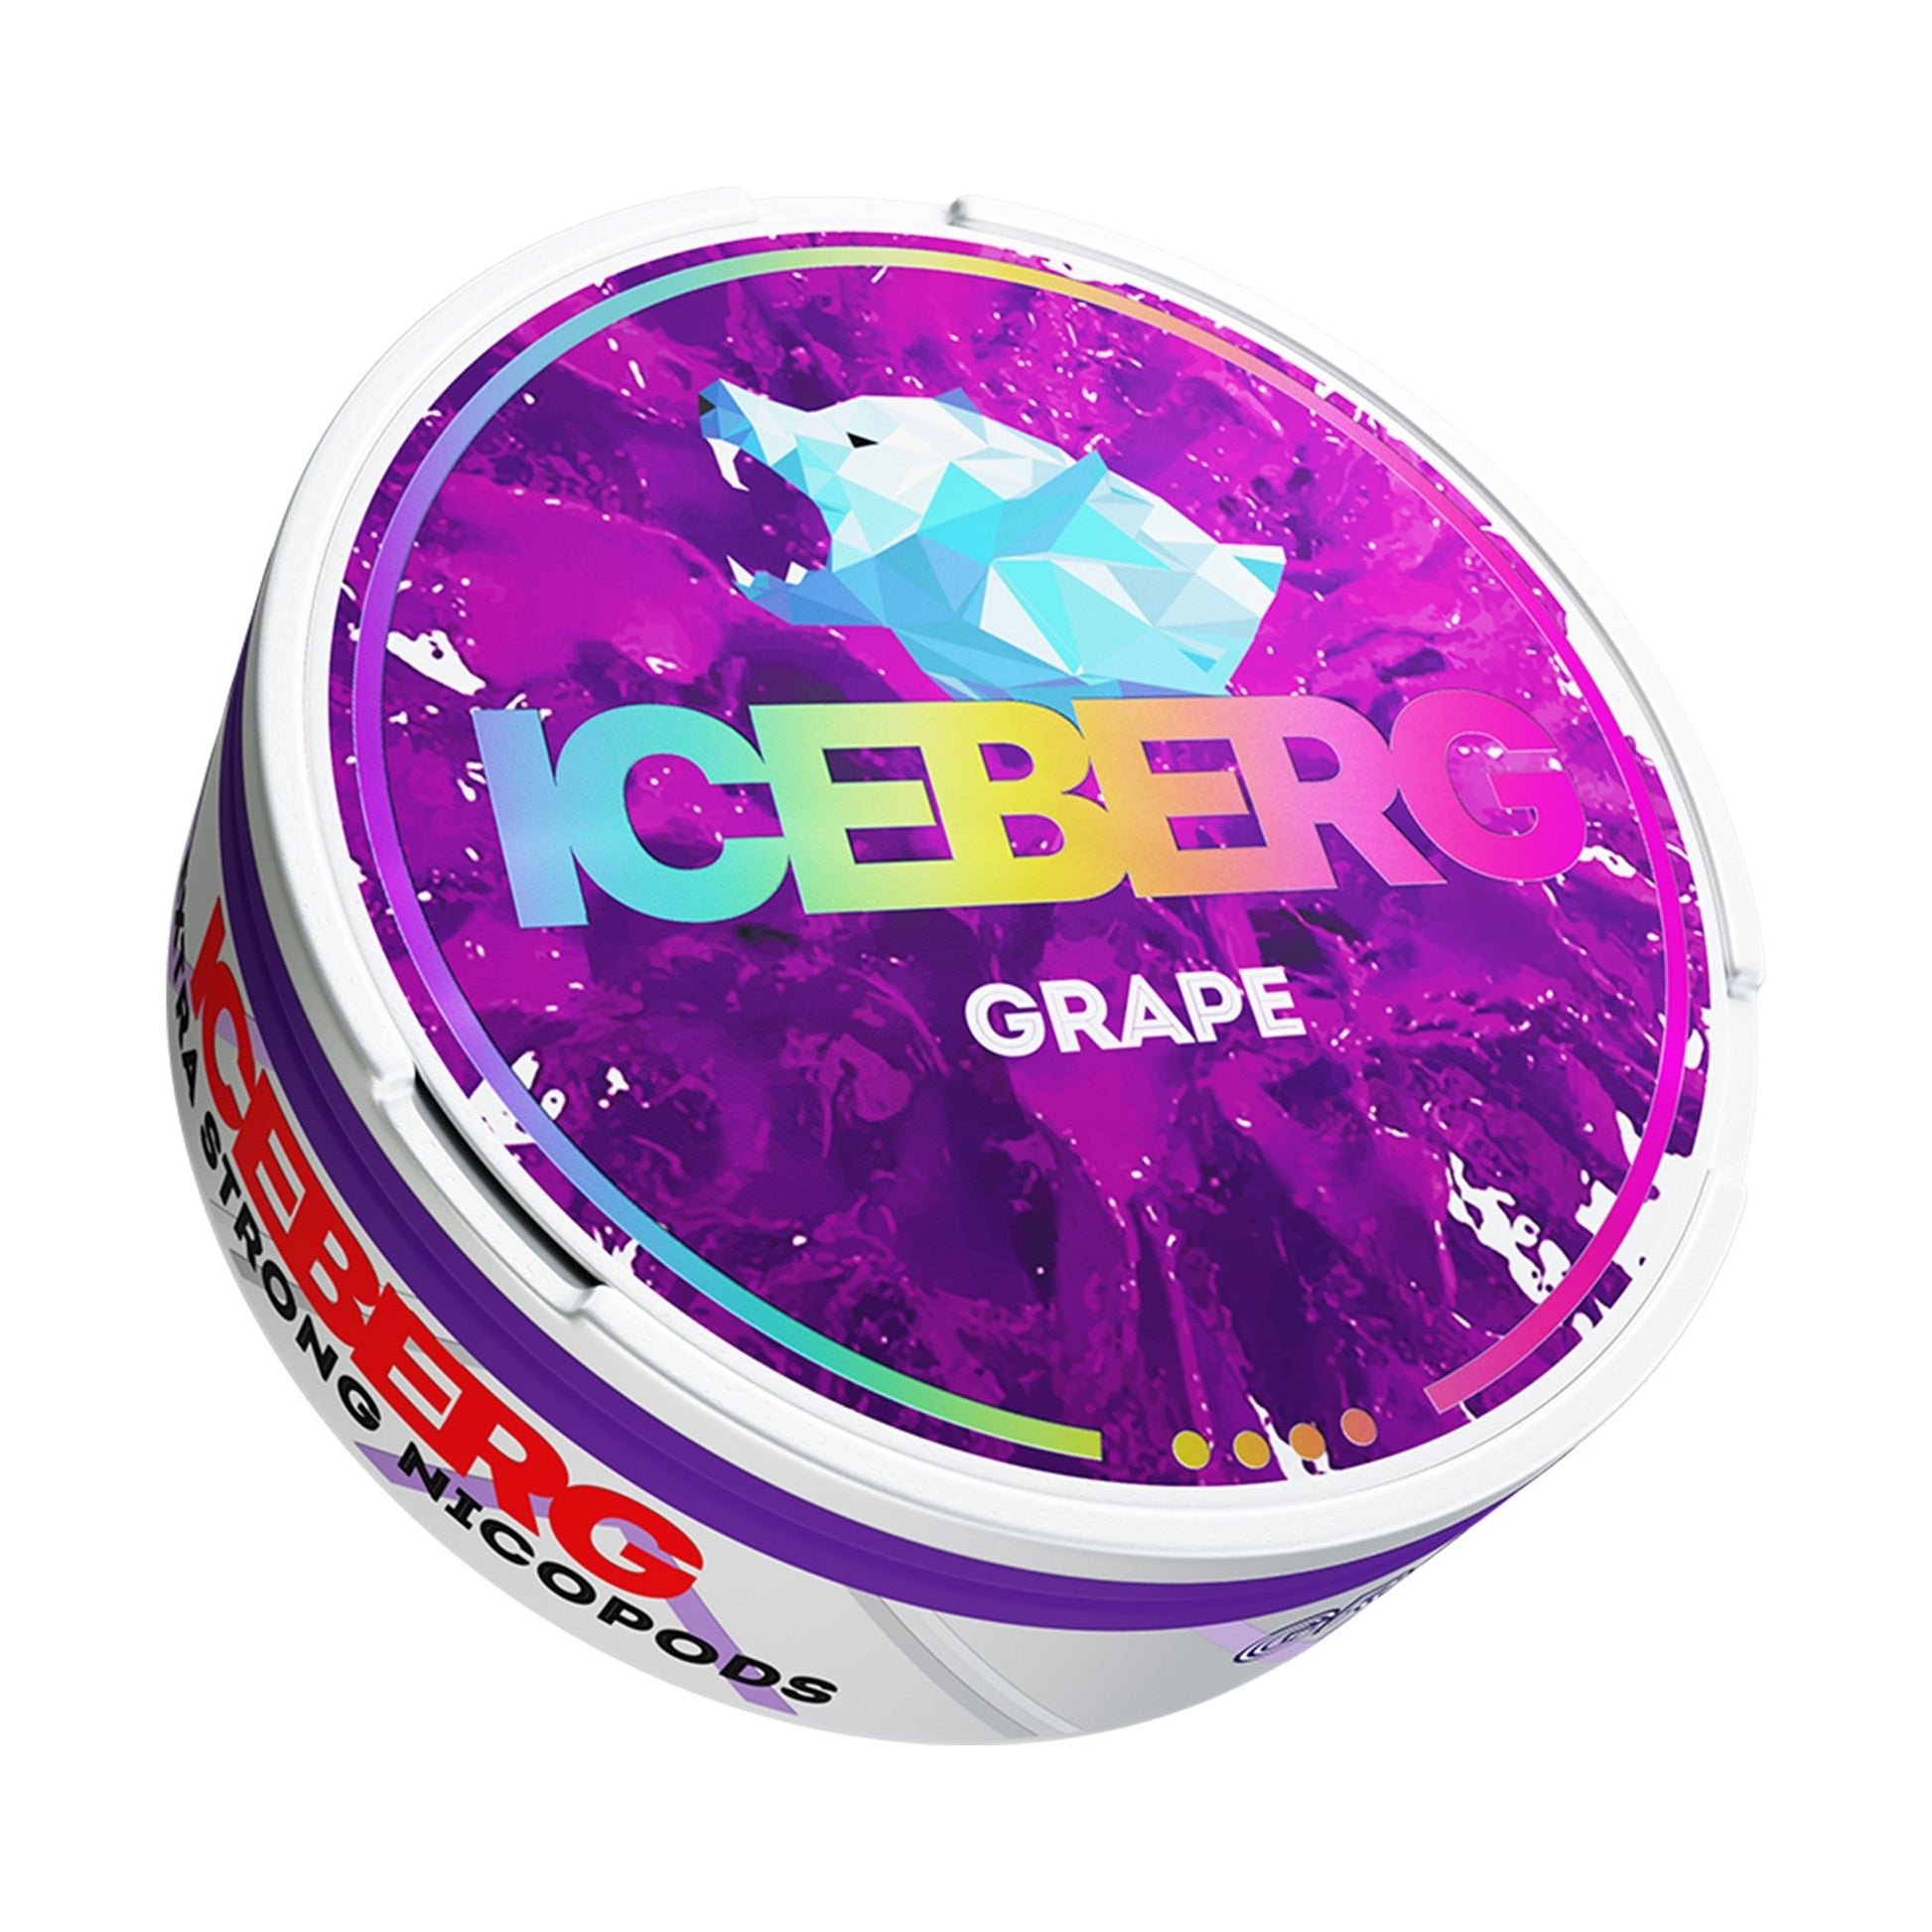 Iceberg Grape - 50mg – Snus Town